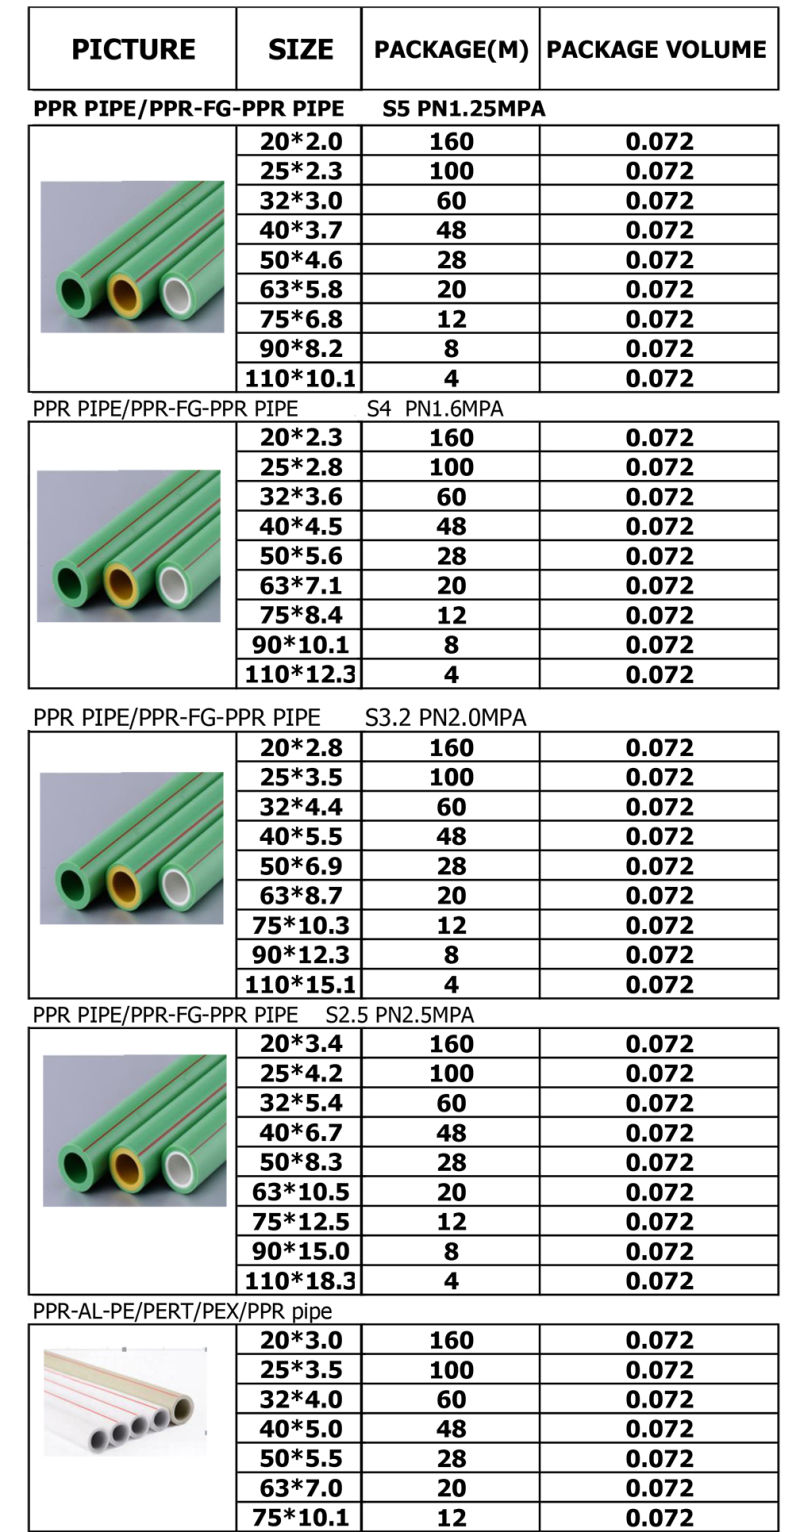 Hb-2022 Polypropylene Random Copolymer Pipe Fittings PP-R Pipe Fittings PPR Fitting Catalog PP-R Pipe Fitting